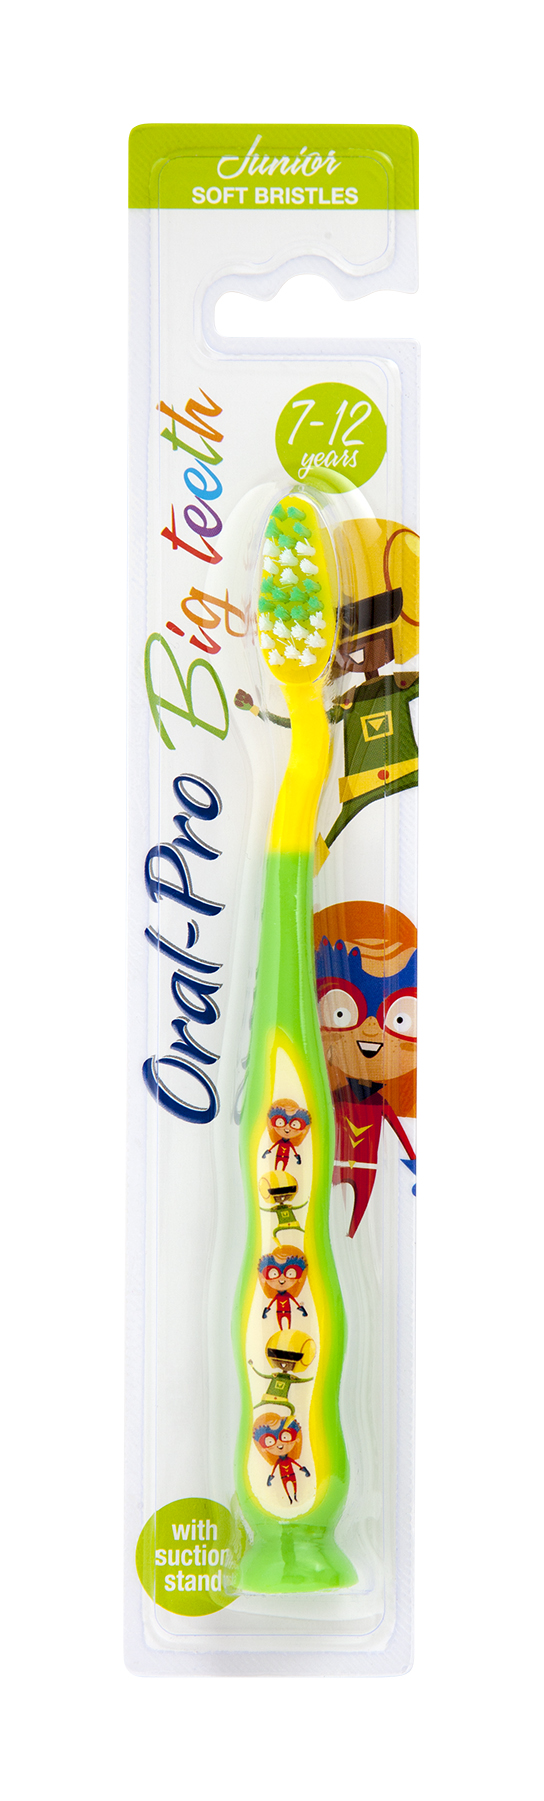 oral pro toothbrush junior - soft